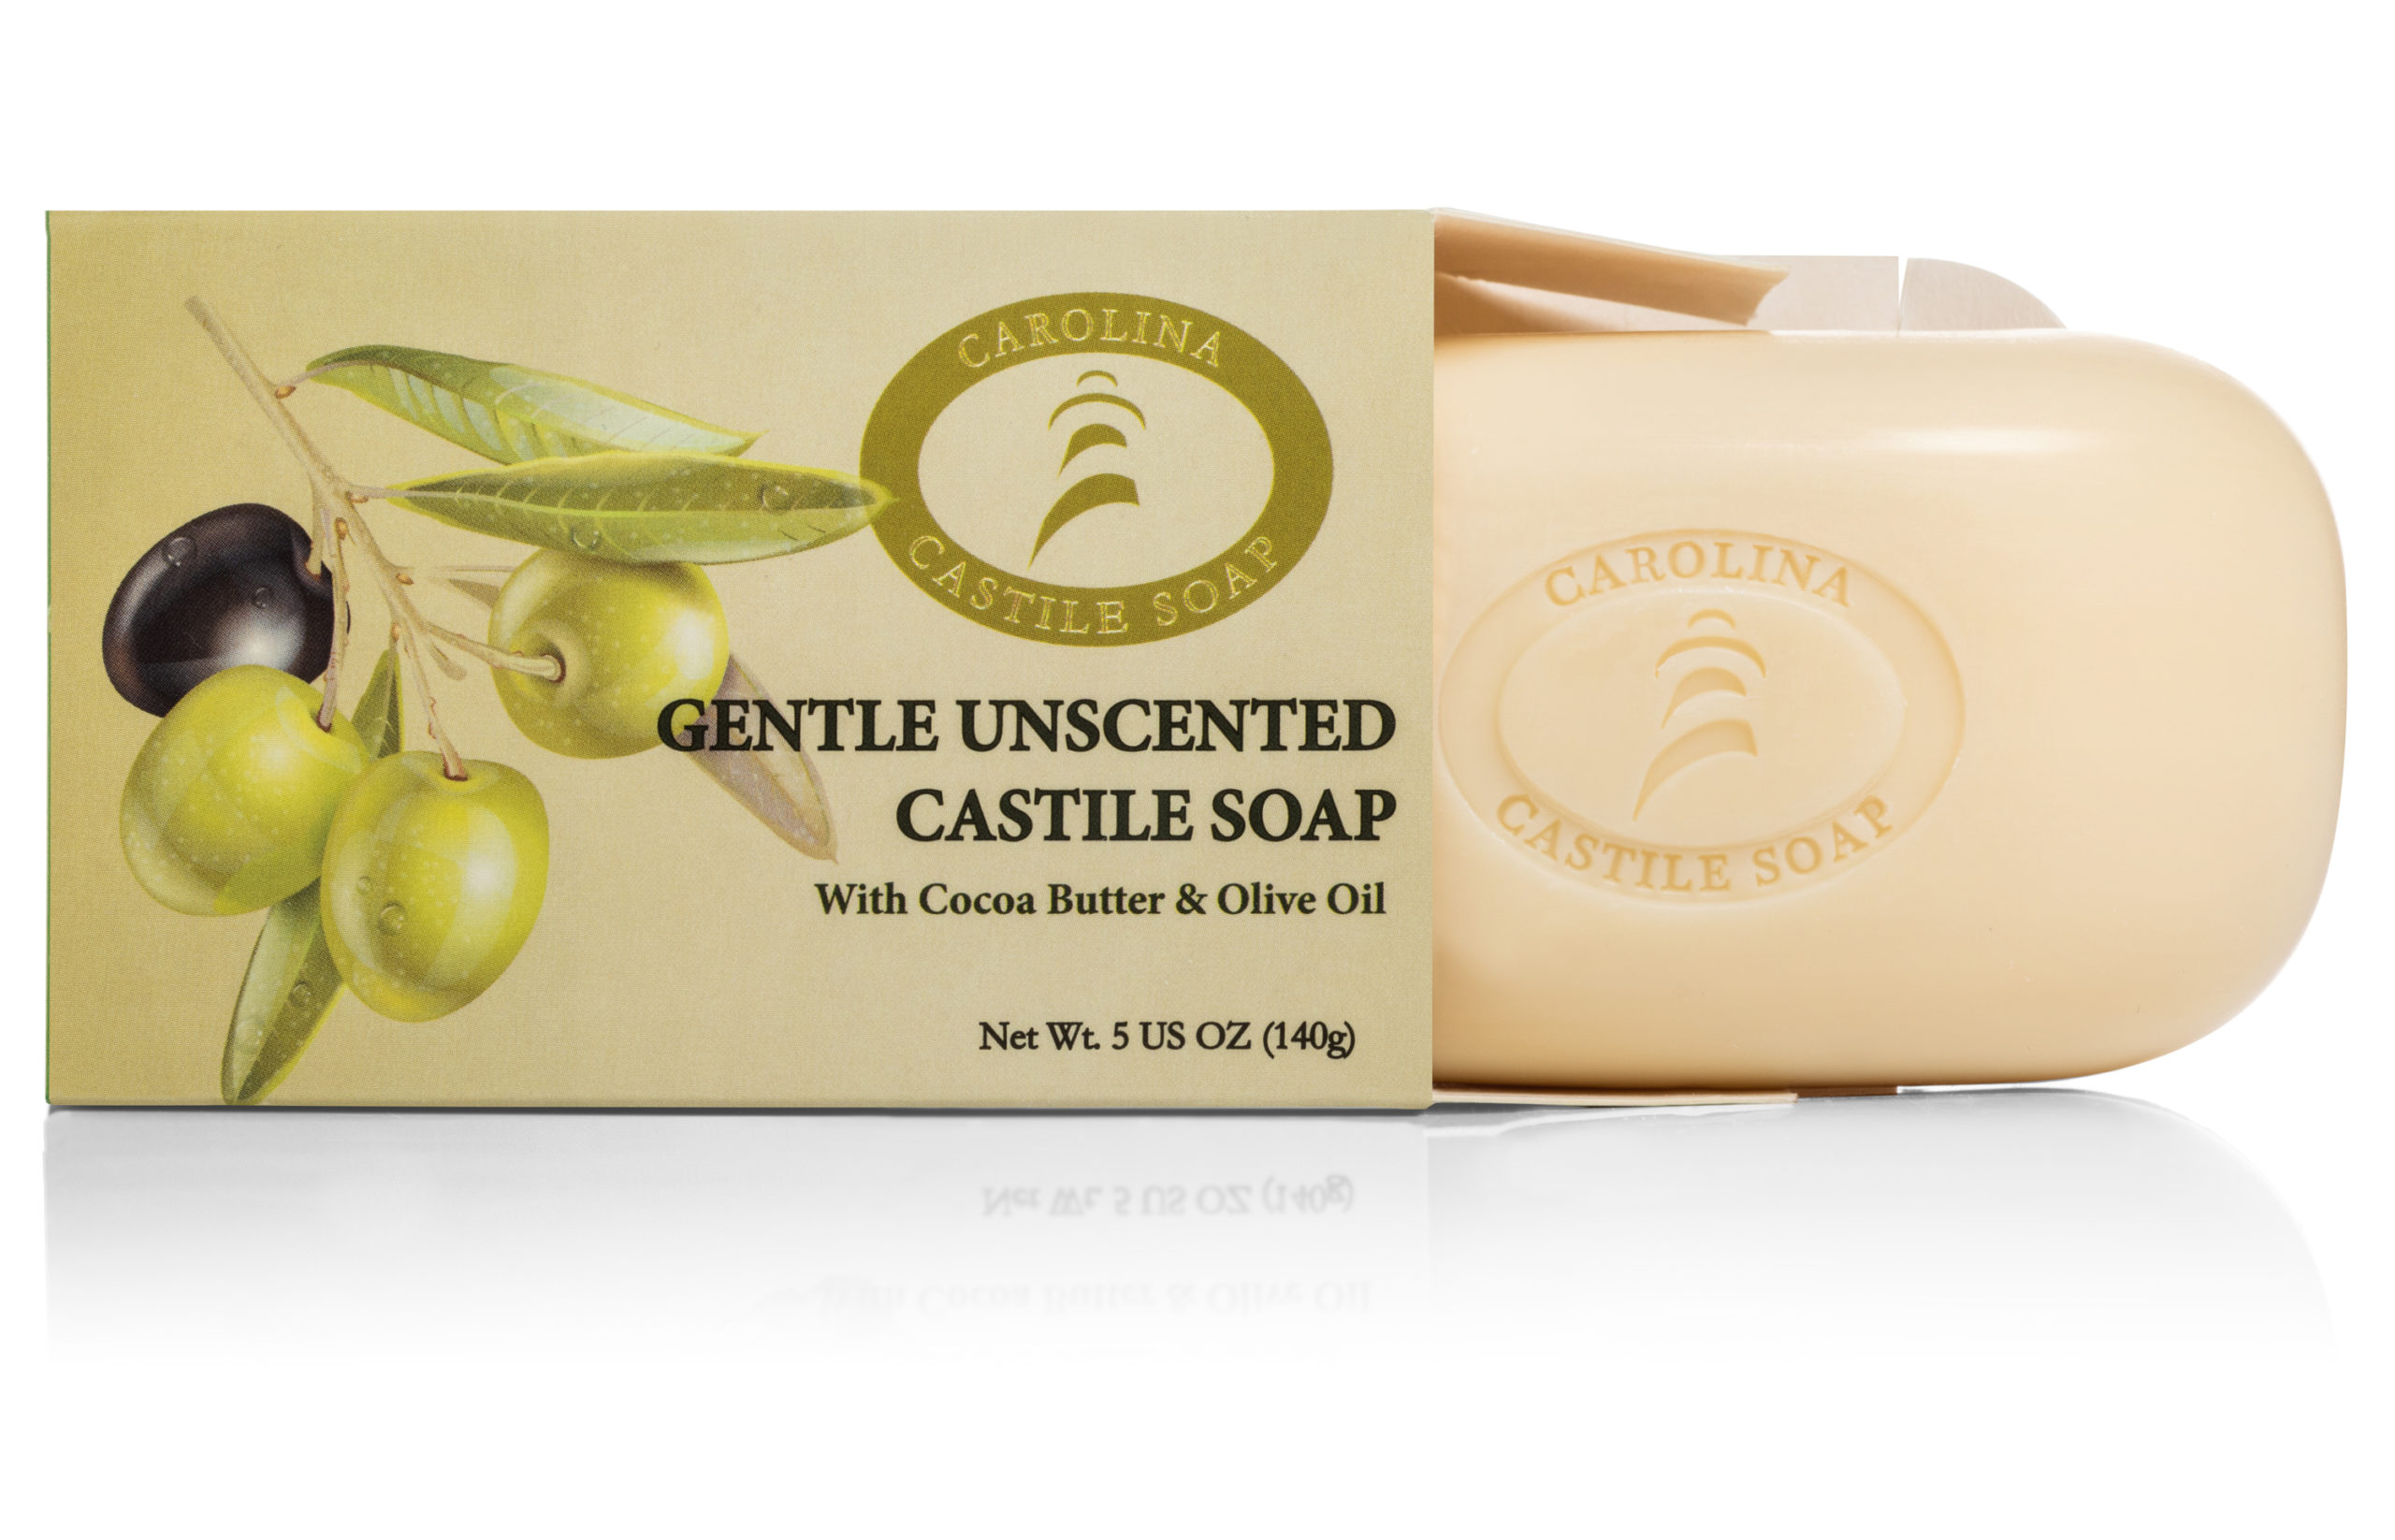 Carolina Castile Soap Gentle Unscented Castile Soap